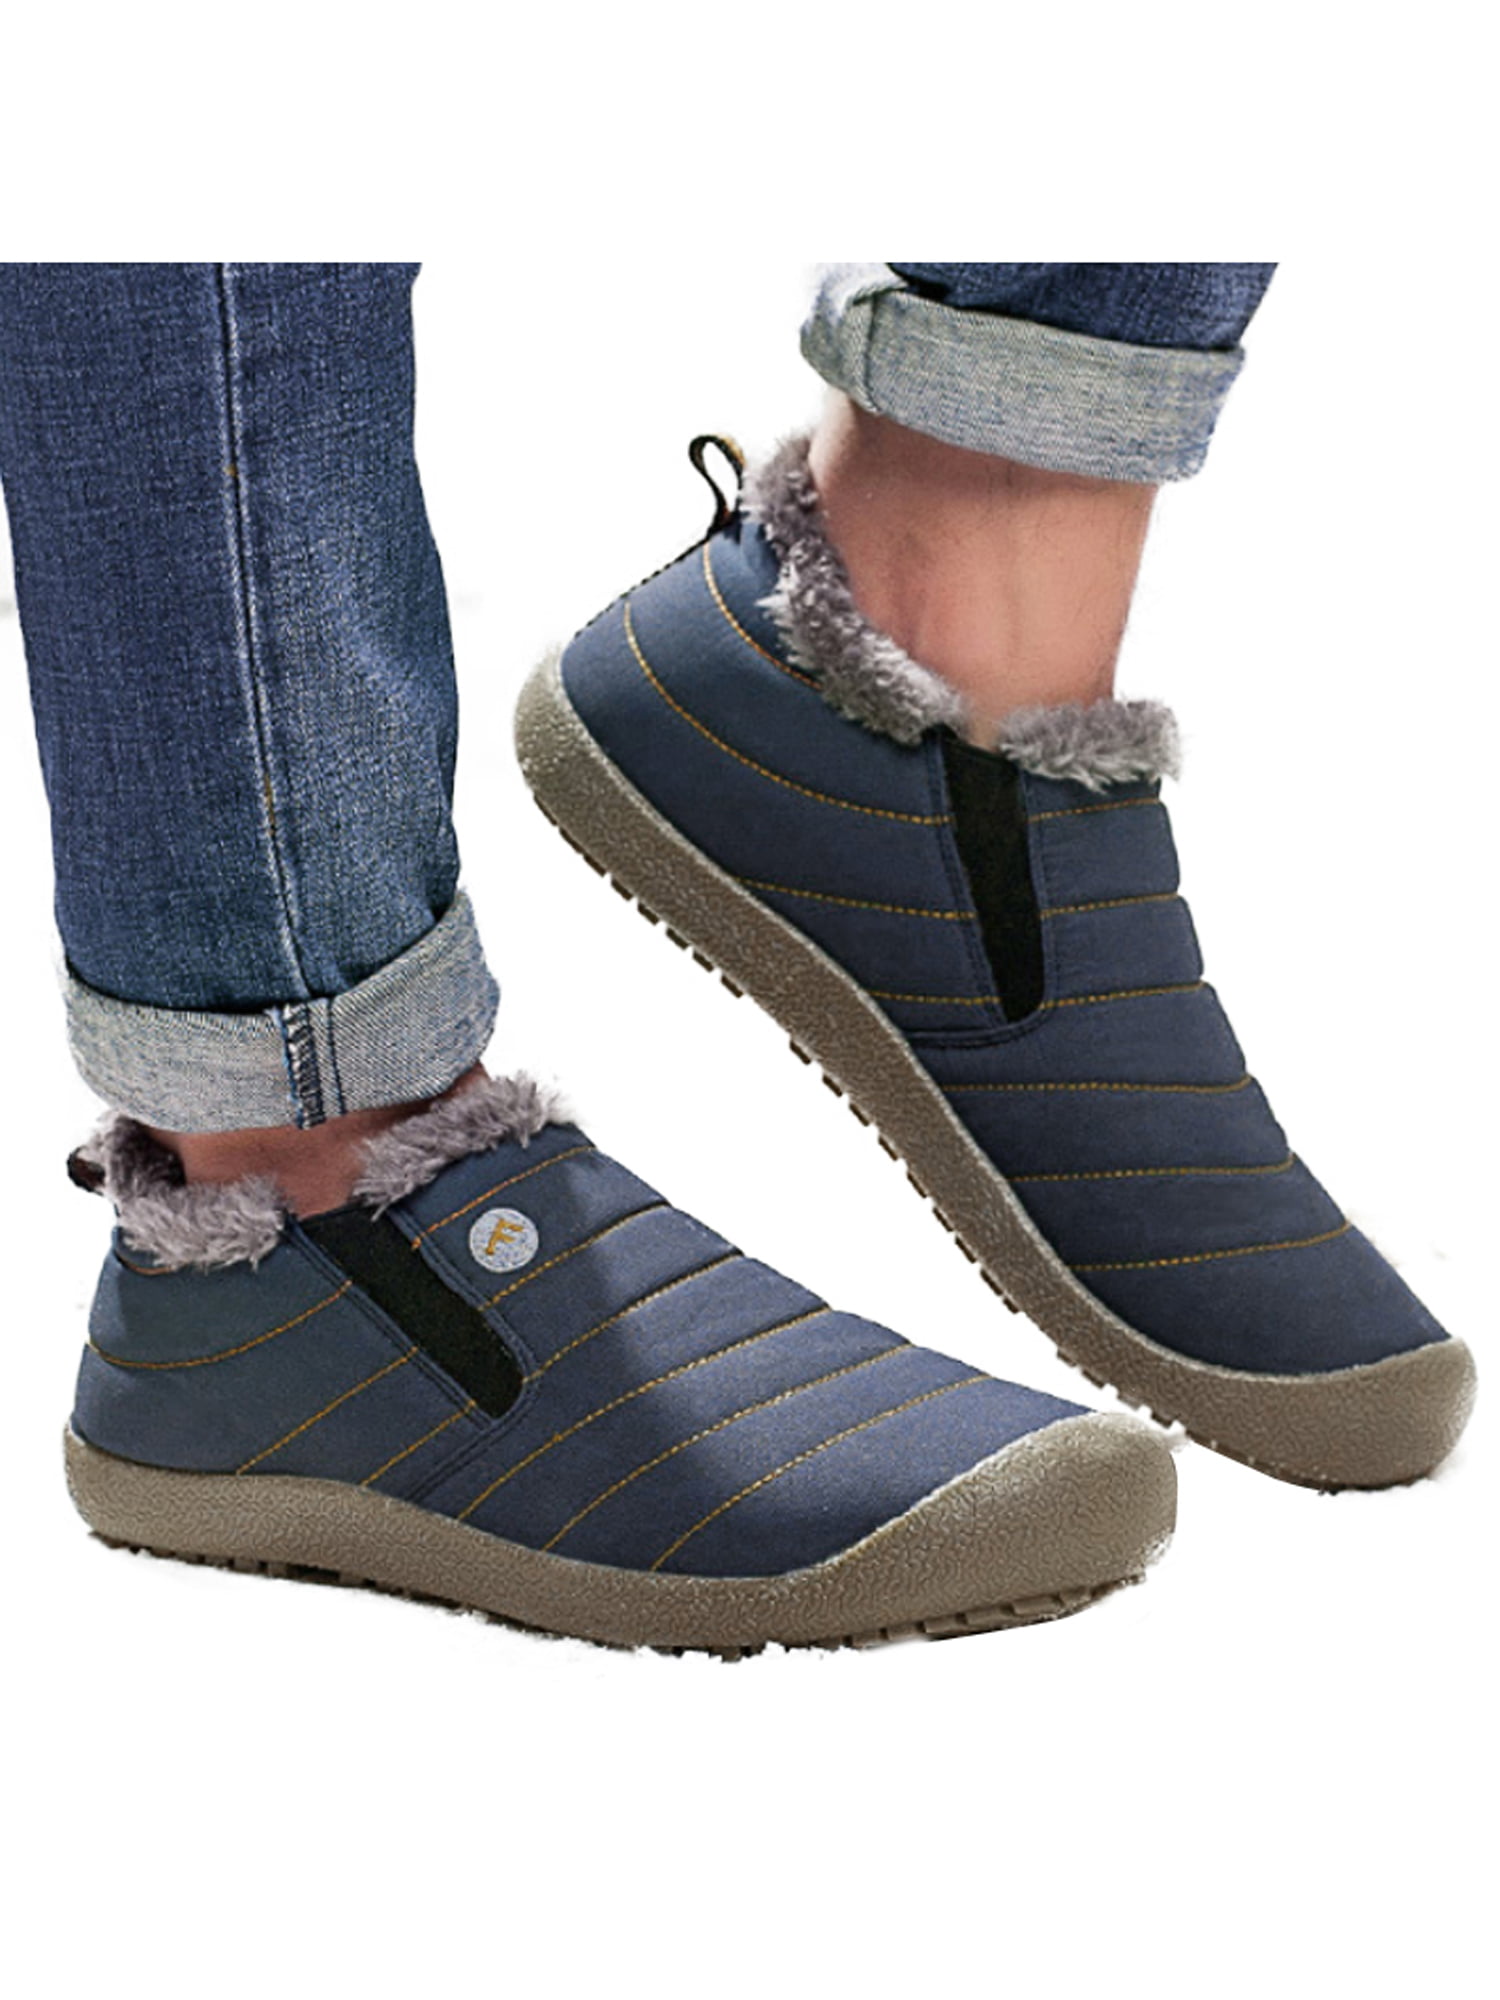 CHENJUAN Shoes Mens Fashionable Snow Boots Casual Comfortable Convenient Winter Faux Fleece Inside Home Shoes